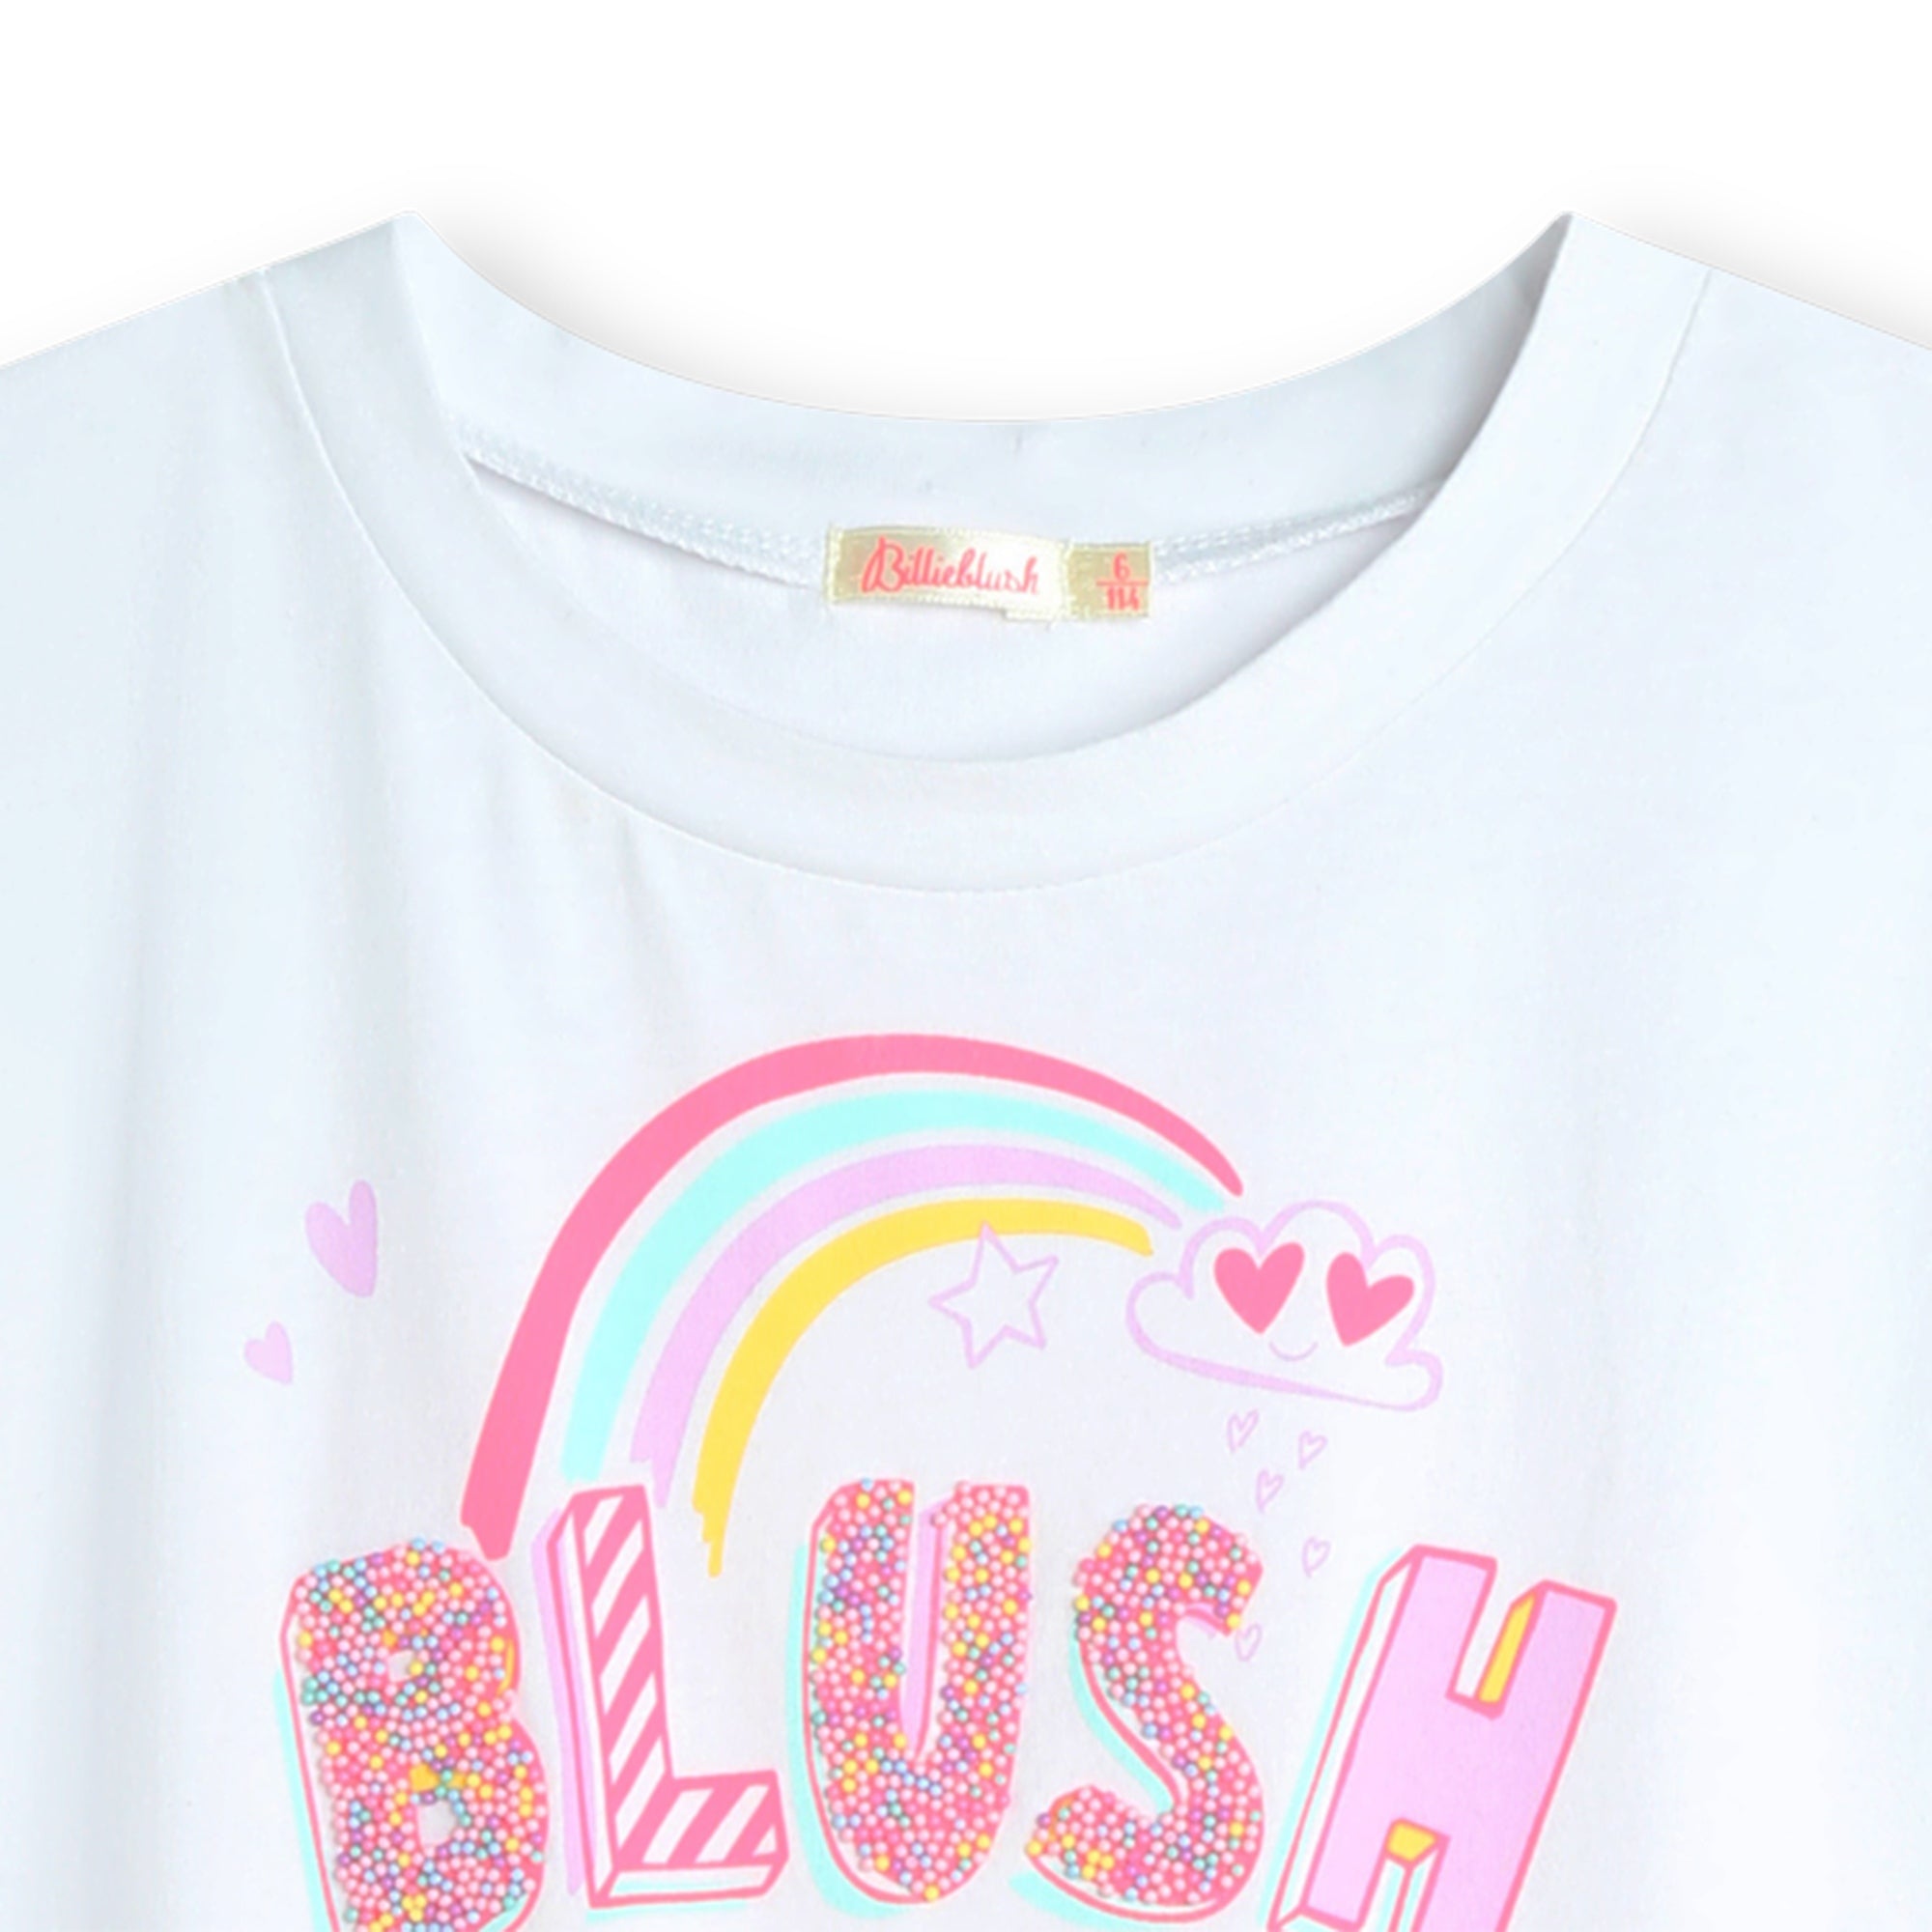 Billieblush Bi-Material "Blush Power" Sleeveless Dress